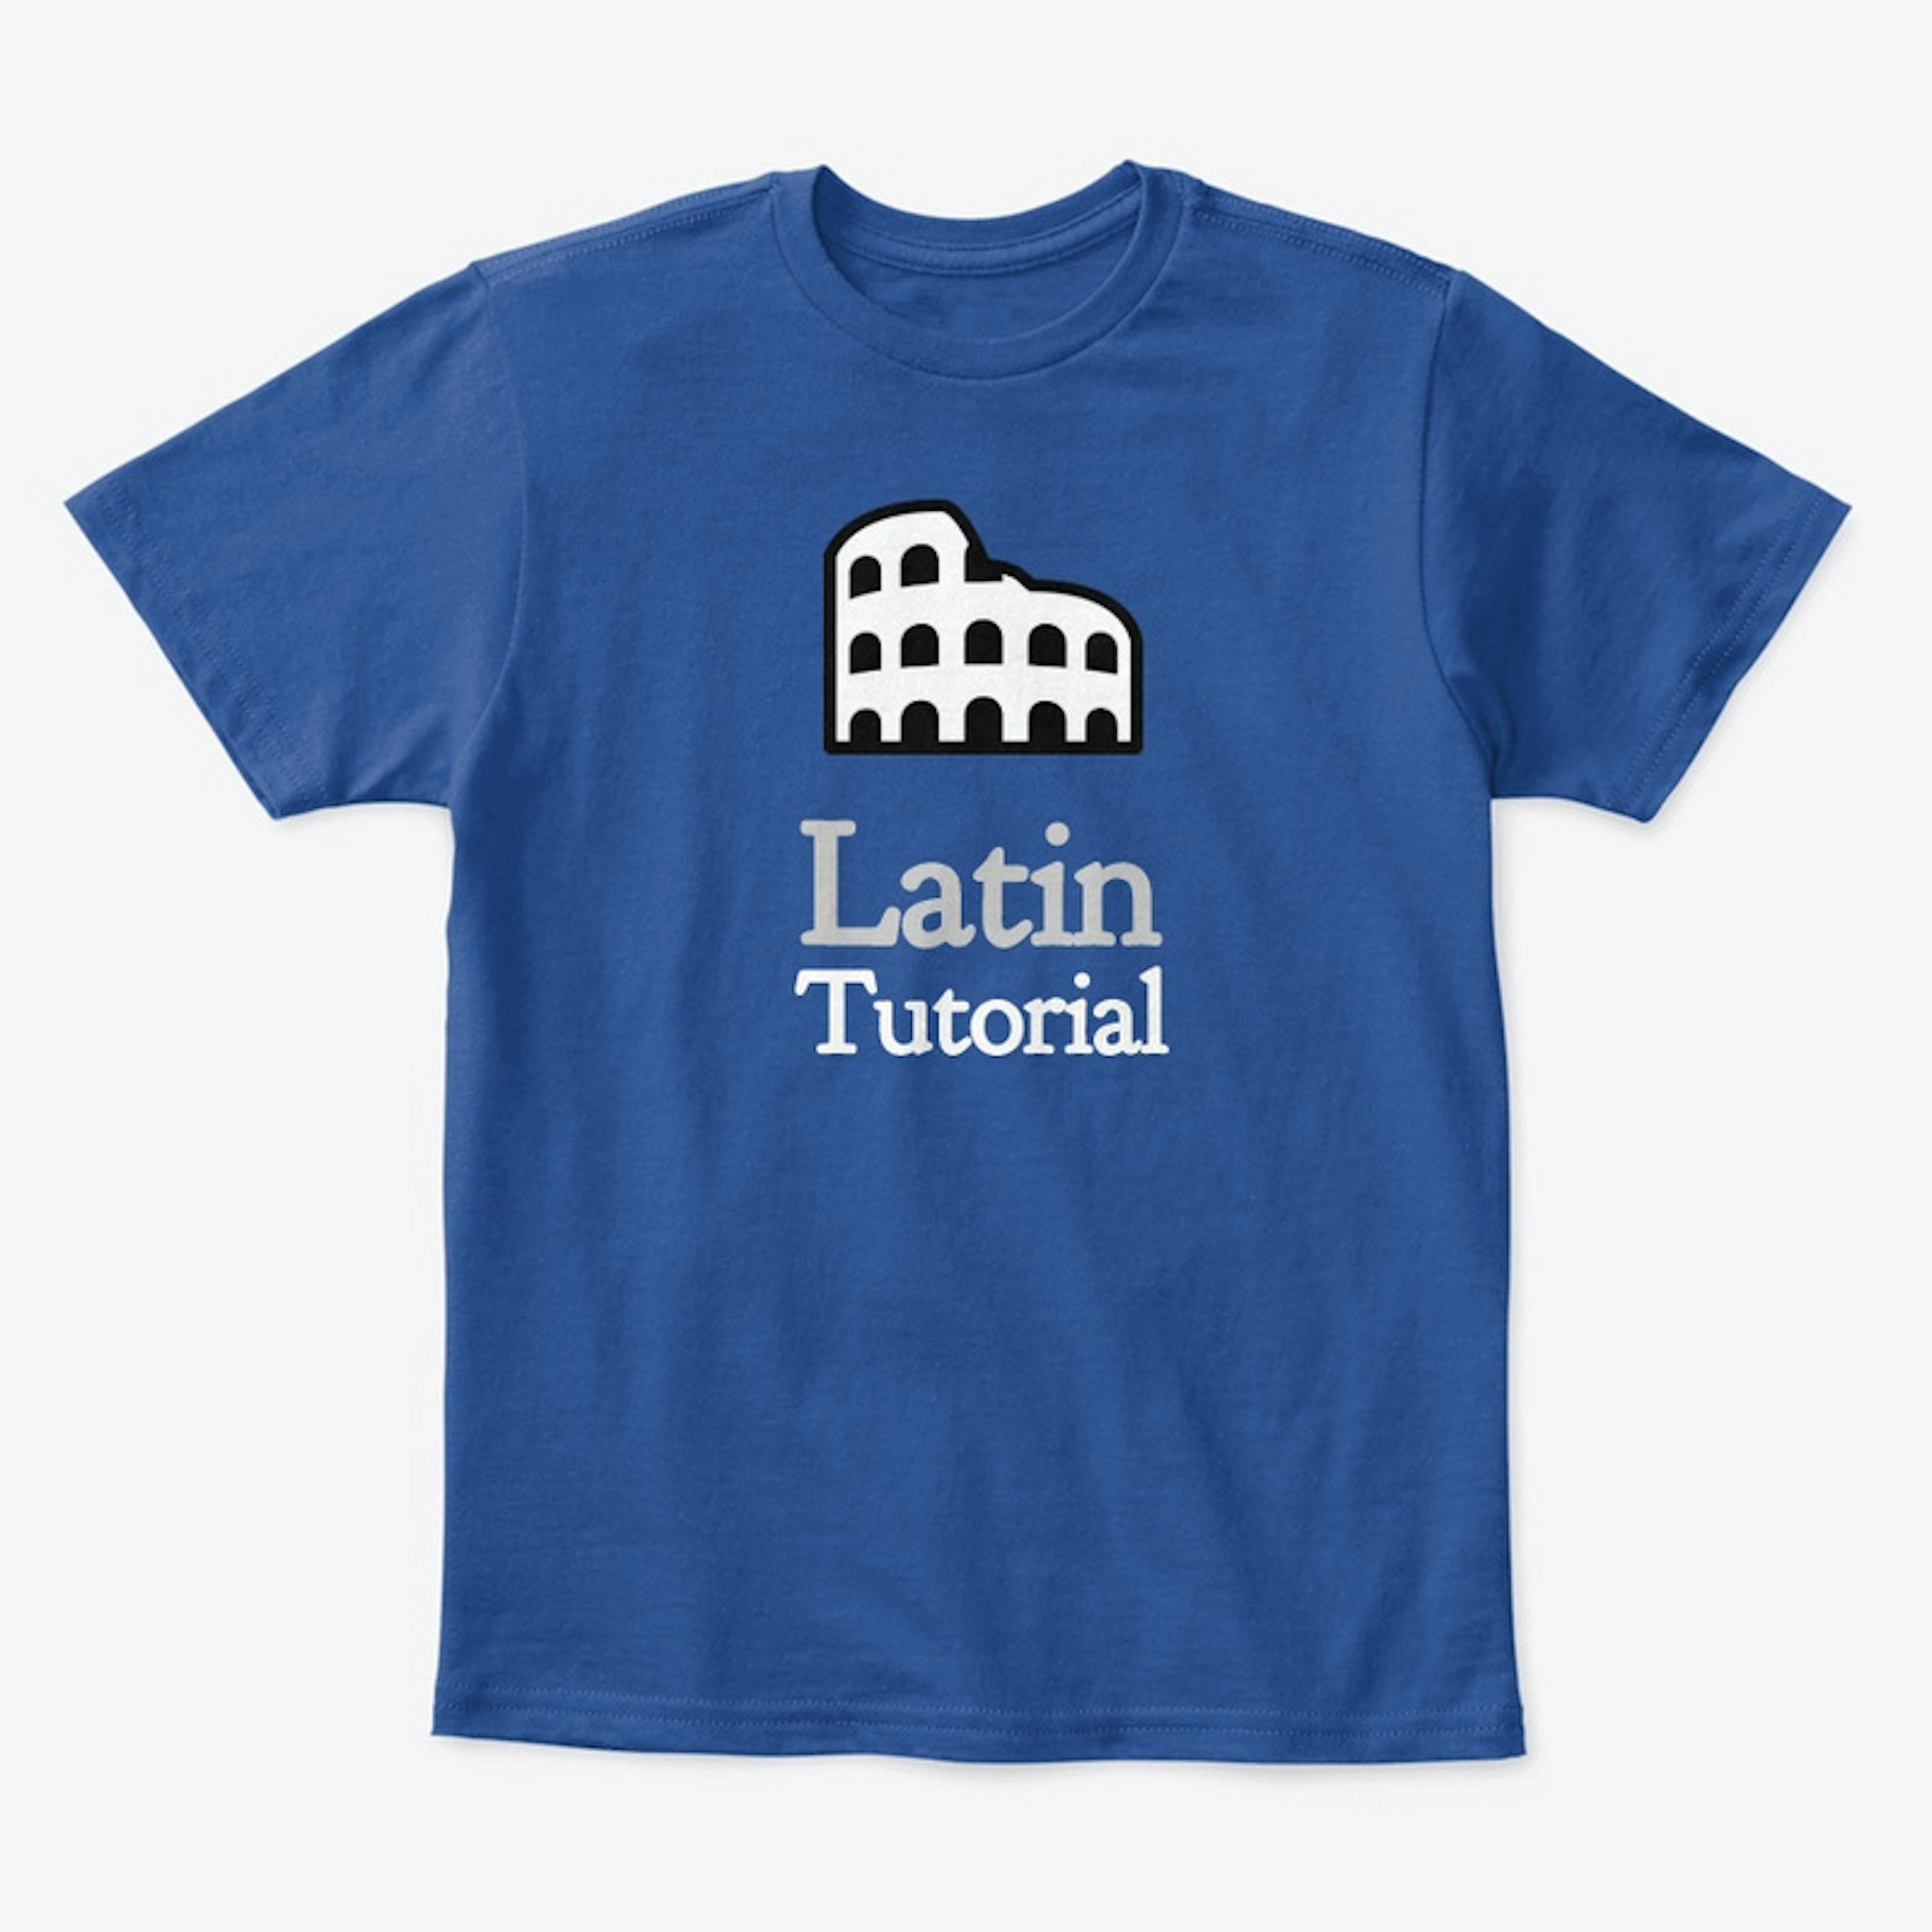 LatinTutorial T-Shirts